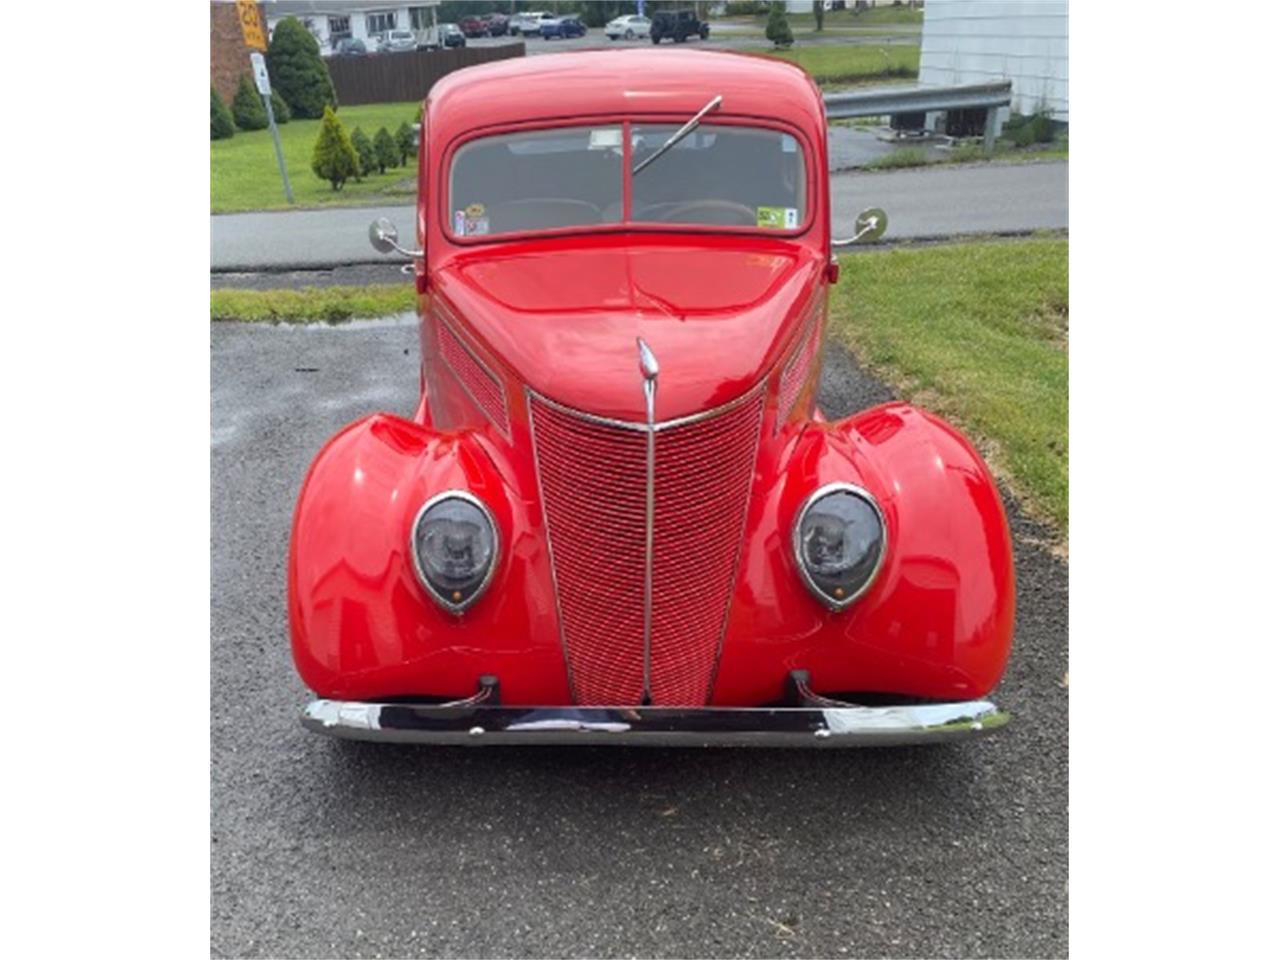 For Sale: 1937 Ford 5-Window Coupe in Cornelius, North Carolina for sale in Cornelius, NC